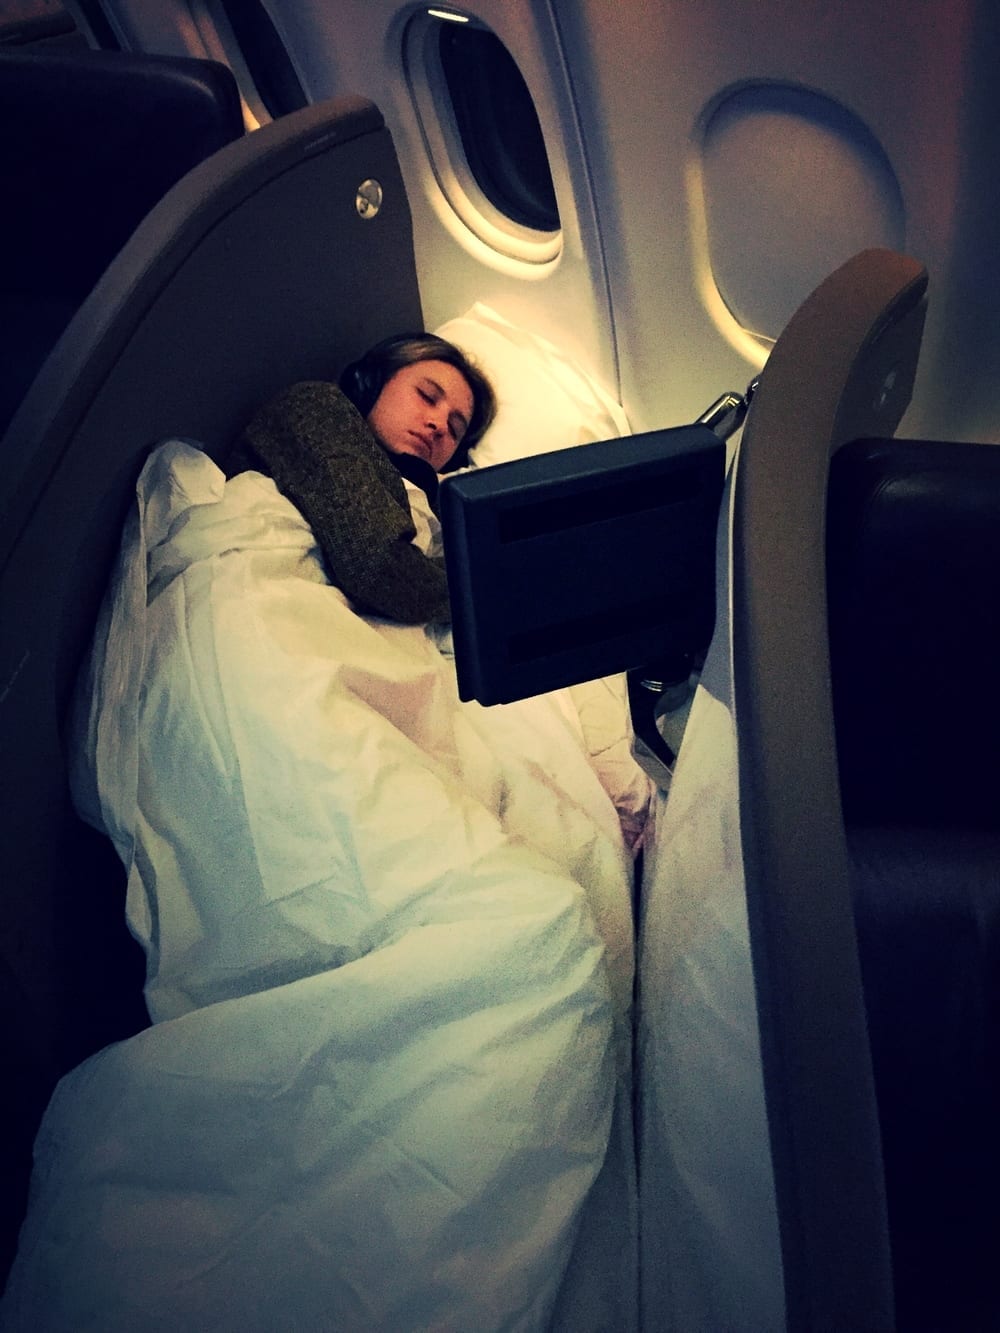 a woman sleeping in an airplane